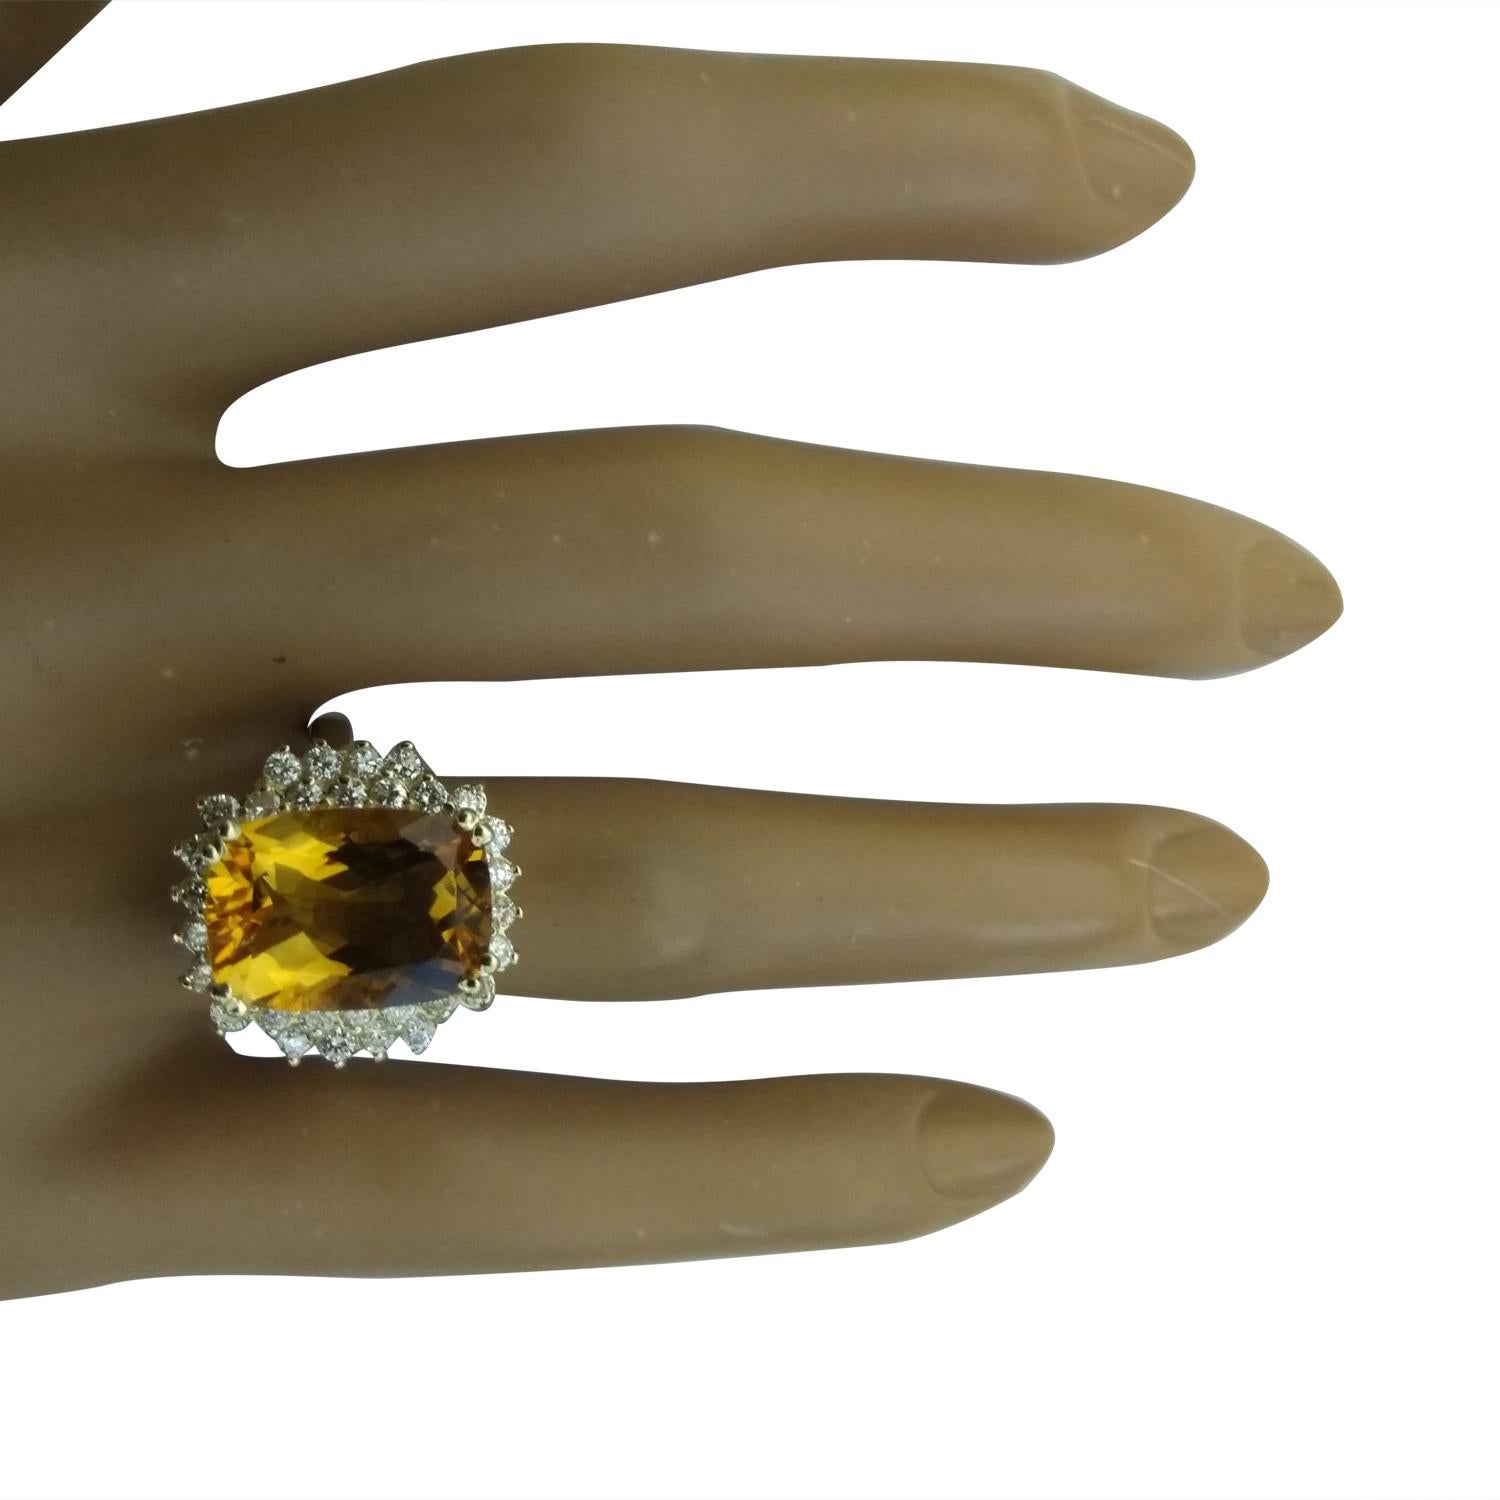 8.80 Carat Natural Citrine 14 Karat Solid Yellow Gold Diamond Ring
Stamped: 14K 
Ring Size 7
Total Ring Weight: 5.7 Grams 
Citrine Weight 8.00 Carat (14.00x10.00 Millimeters)
Natural Citrine Treatment: Heating Only
Diamond Weight: 0.80 Carat (F-G